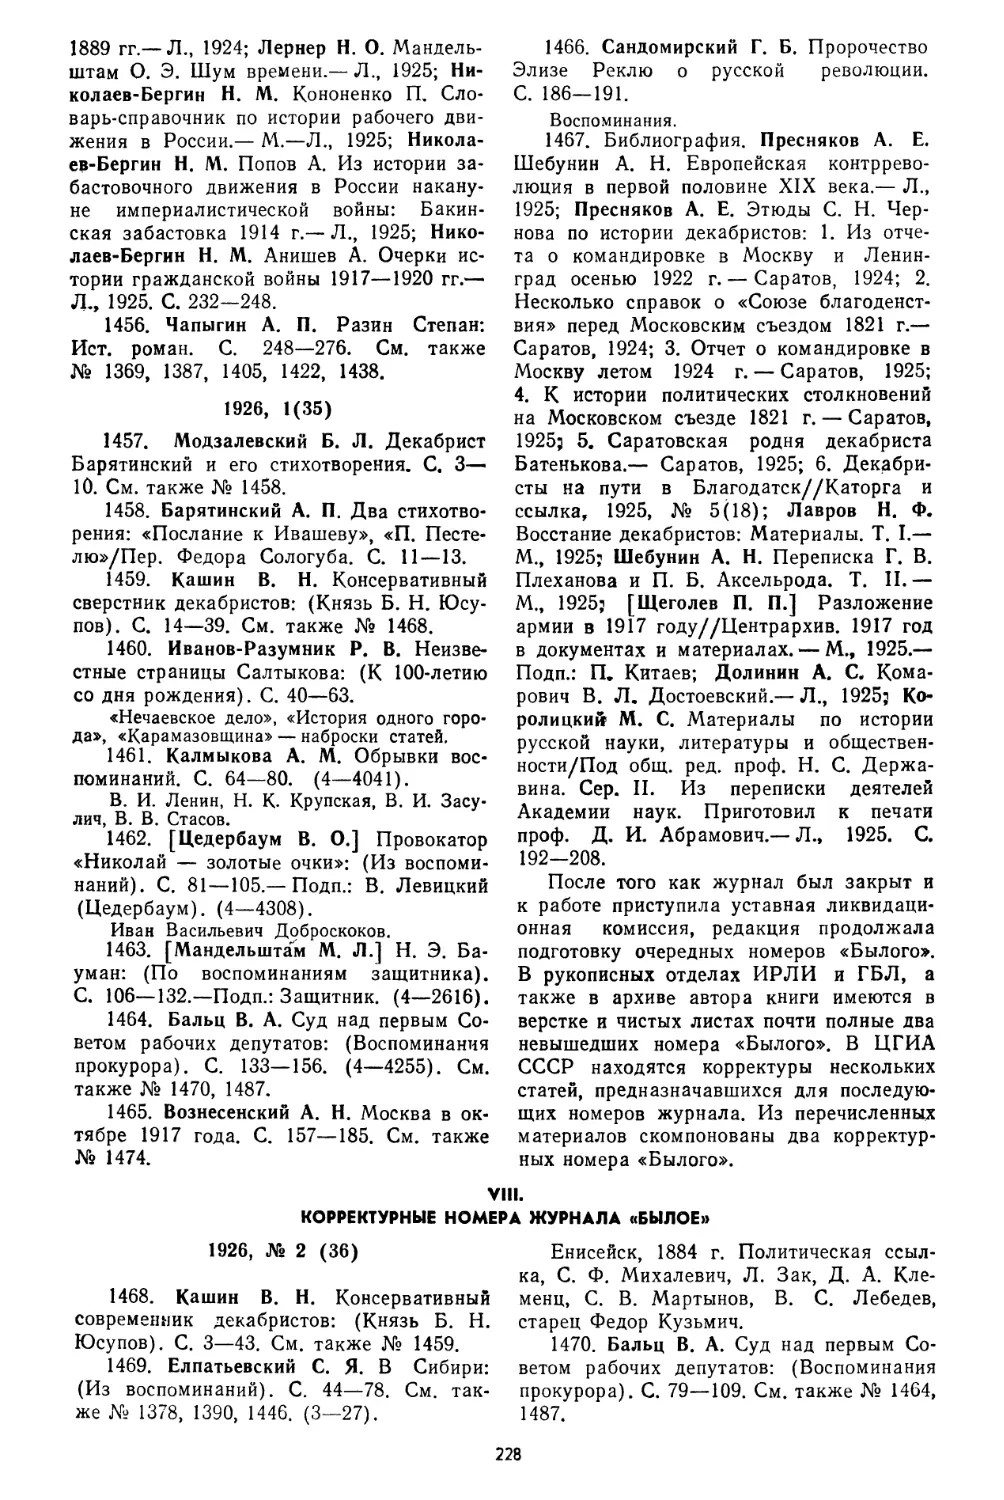 VIII. Корректурные номера журнала «Былое», 1926, № 1468—1489